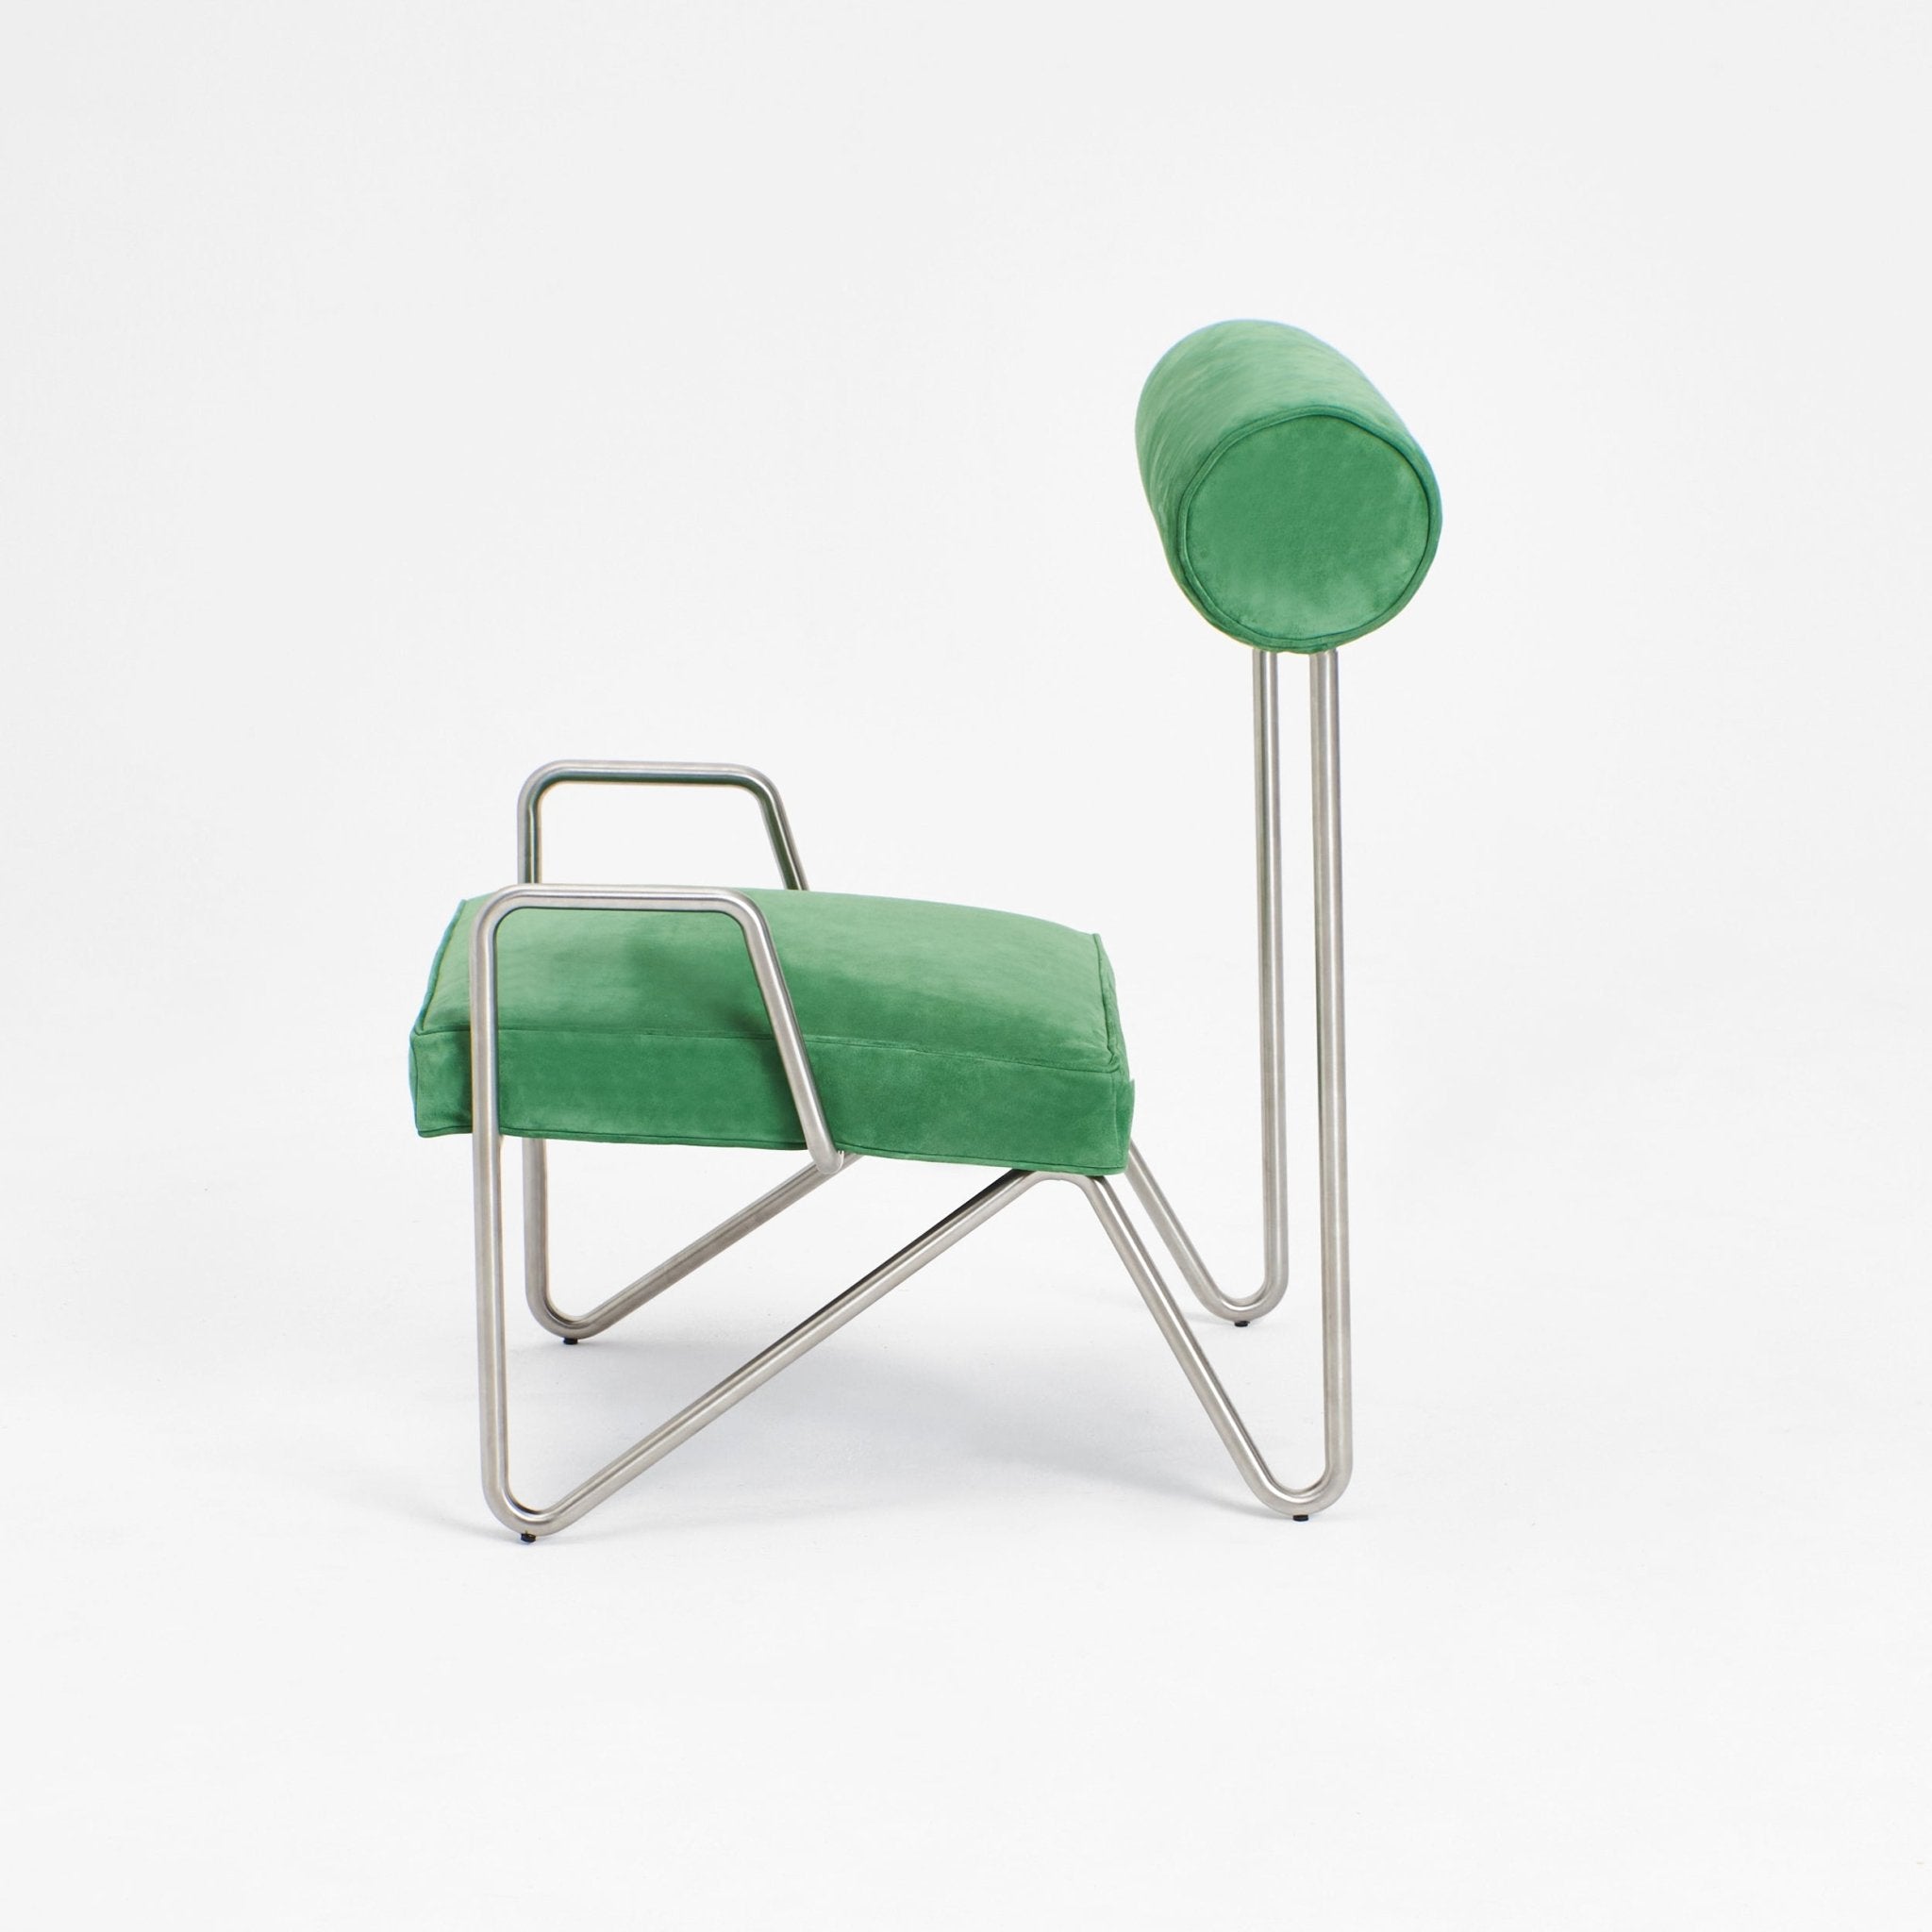 Larry's Lounge Sessel - Grün Lounge Sessel von Project 213A